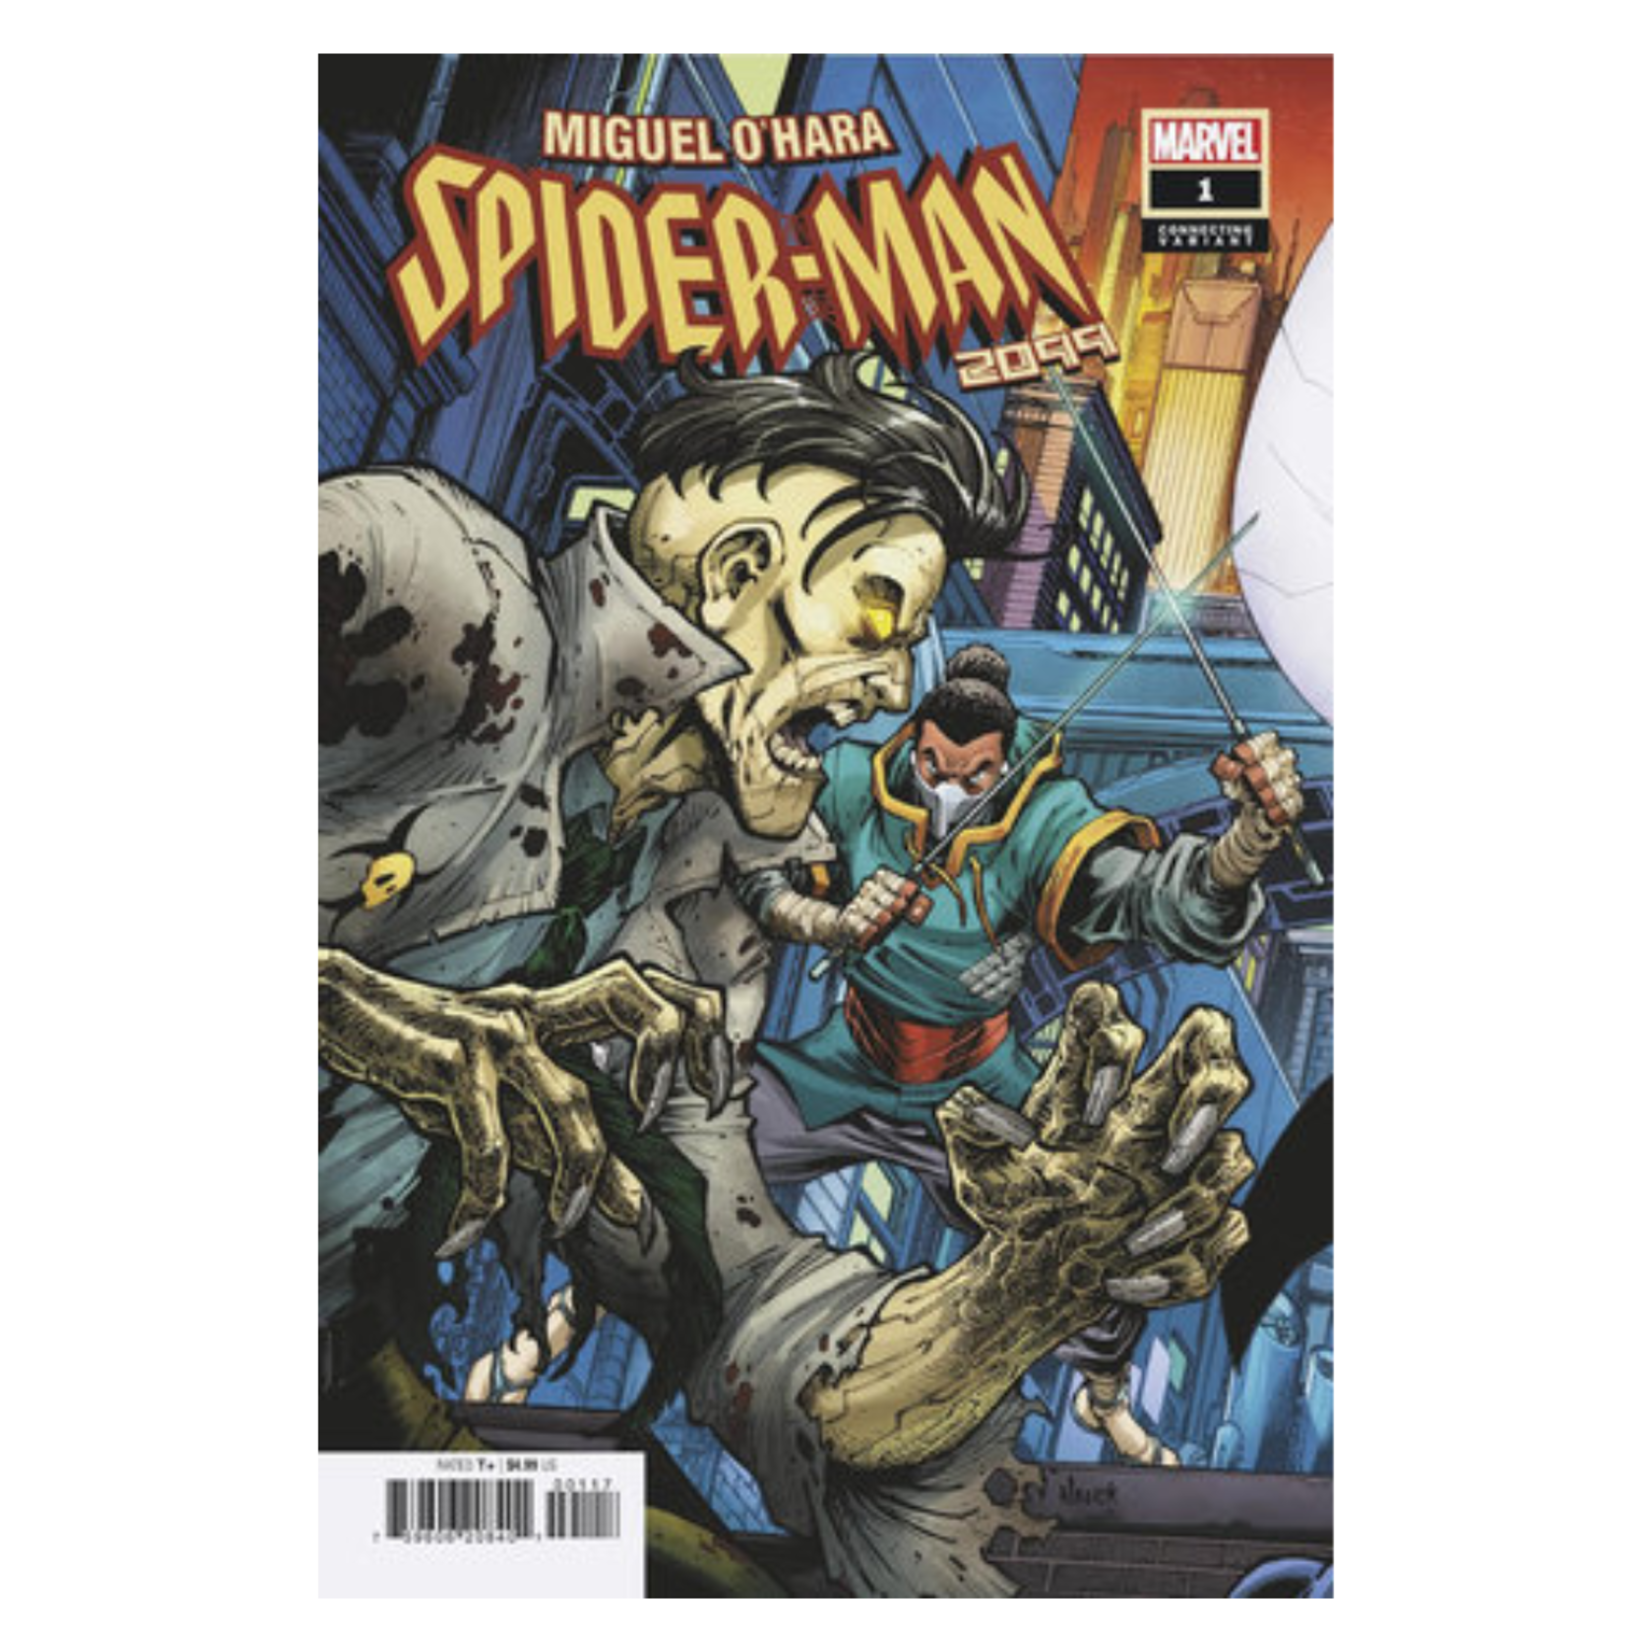 Marvel Comics Miguel O'hara Spider-Man 2099 #1 Todd Nauck Connecting 1:25 Variant